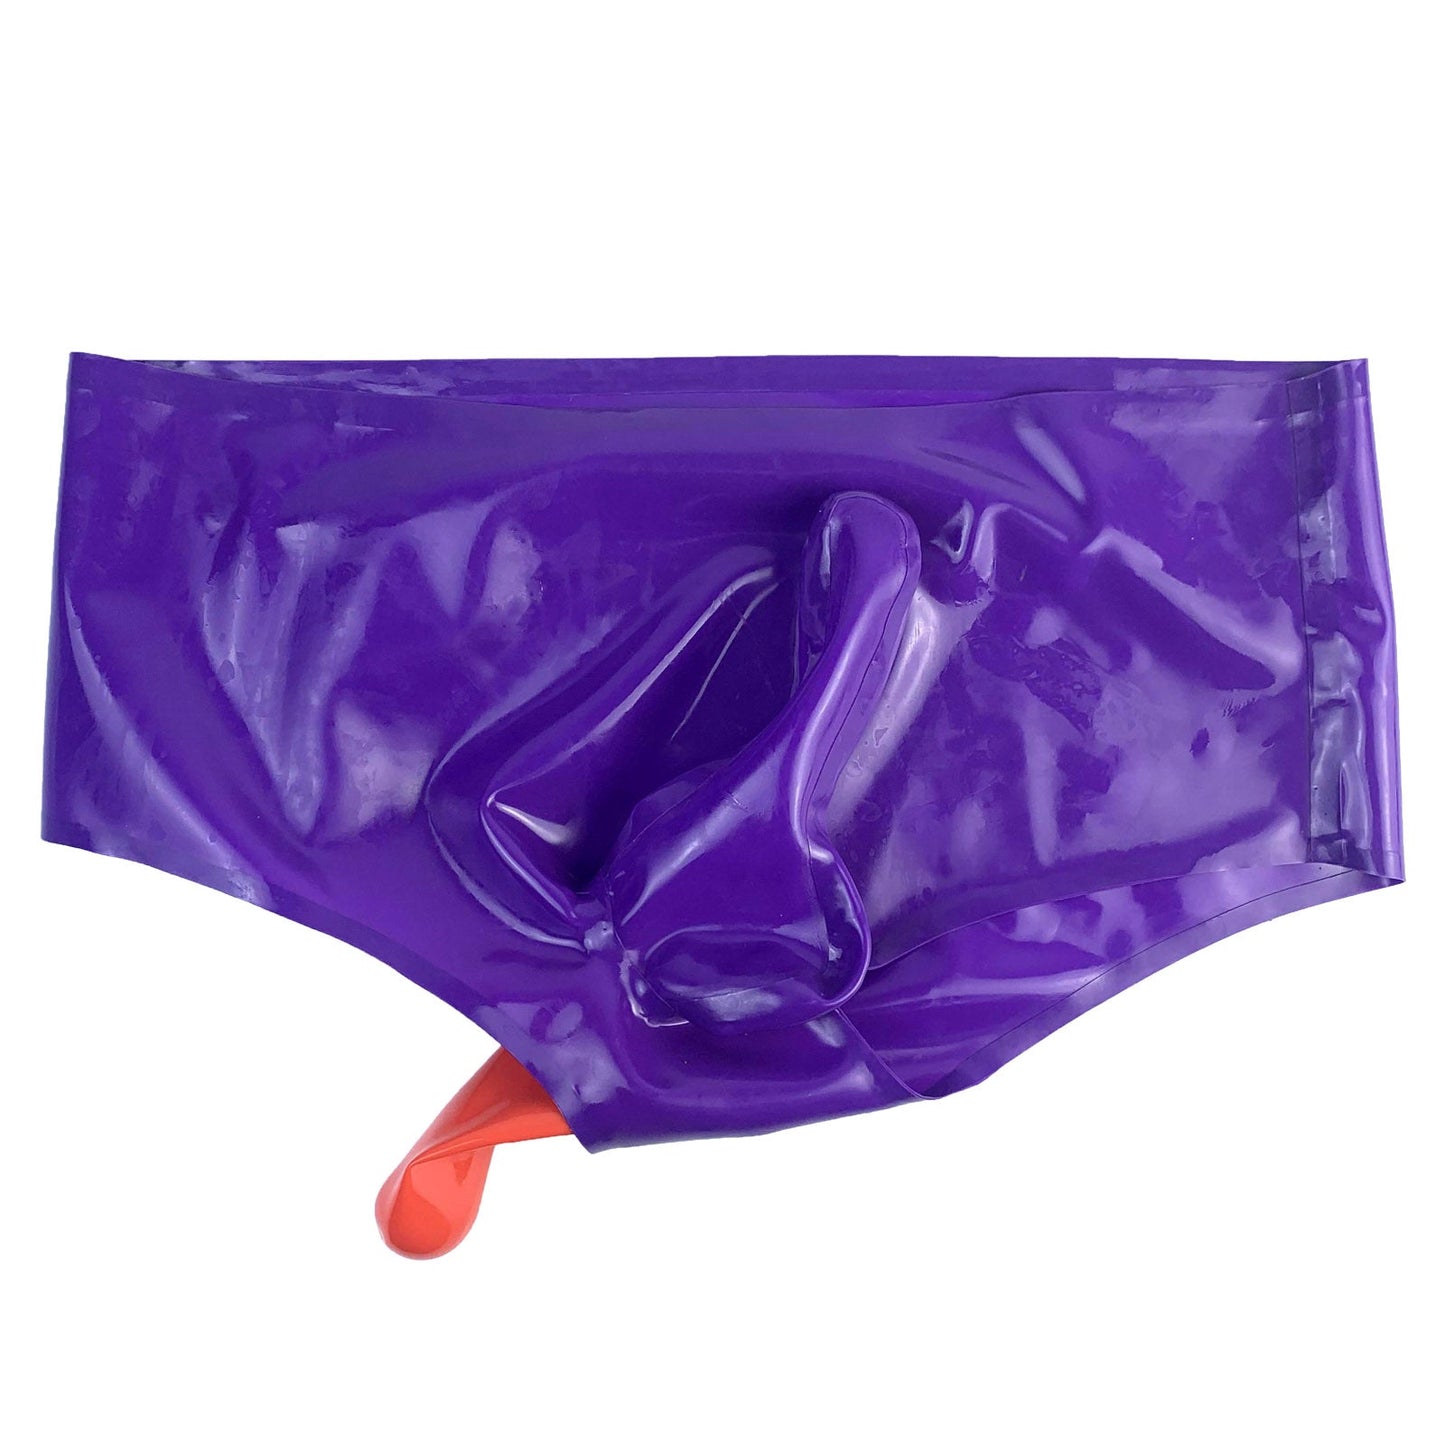 MONNIK Latex Shorts Briefs Rubber Underwear Purple Shorts Tight with Two Condom for Bodysuit Fetish Party Club wear